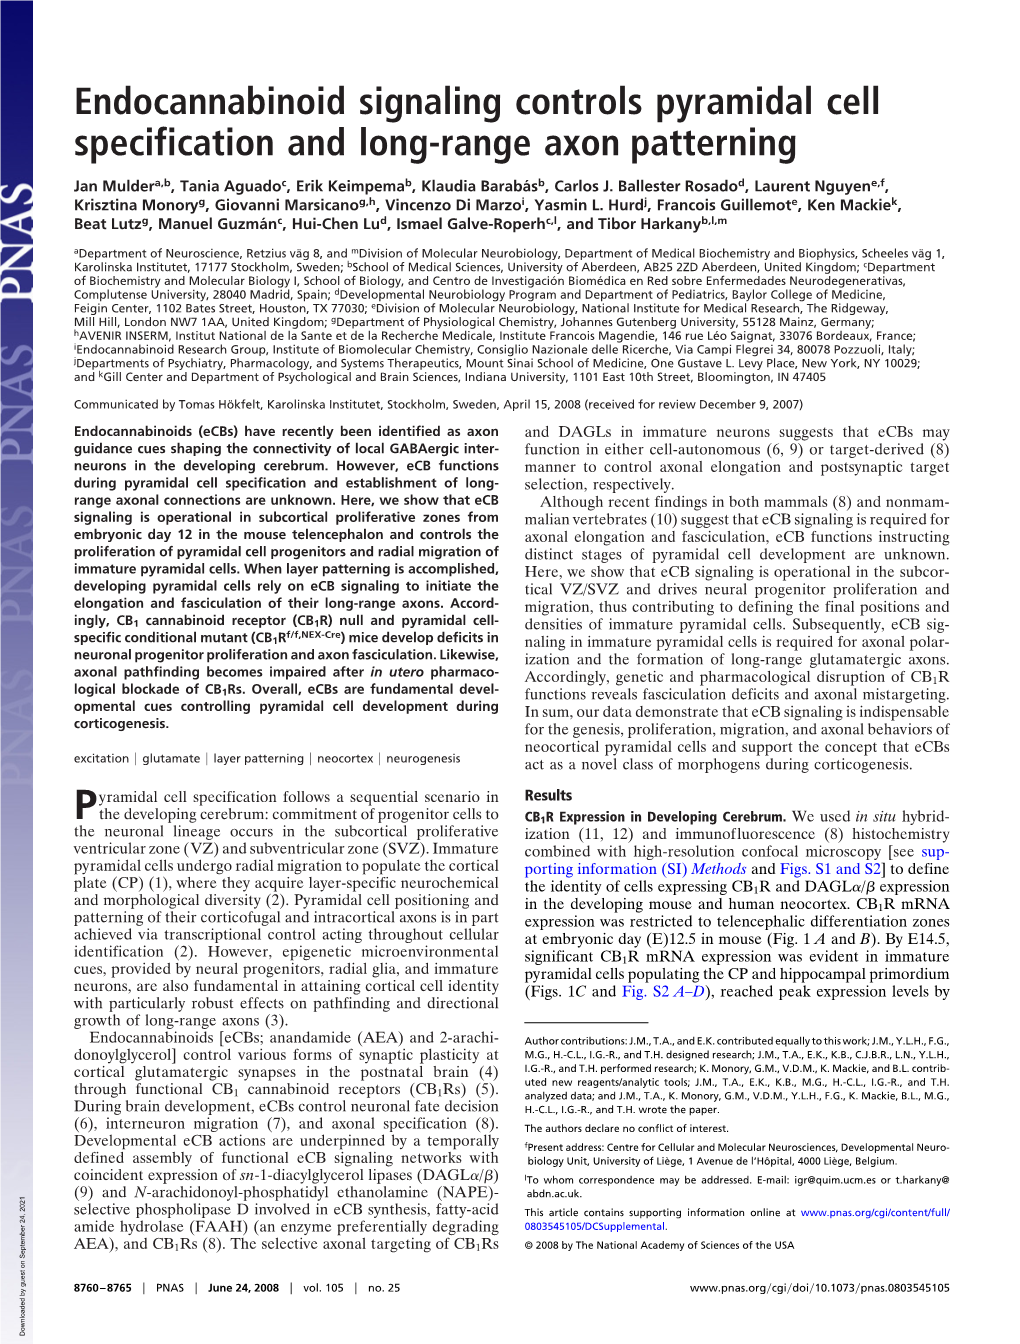 Endocannabinoid Signaling Controls Pyramidal Cell Specification and Long-Range Axon Patterning